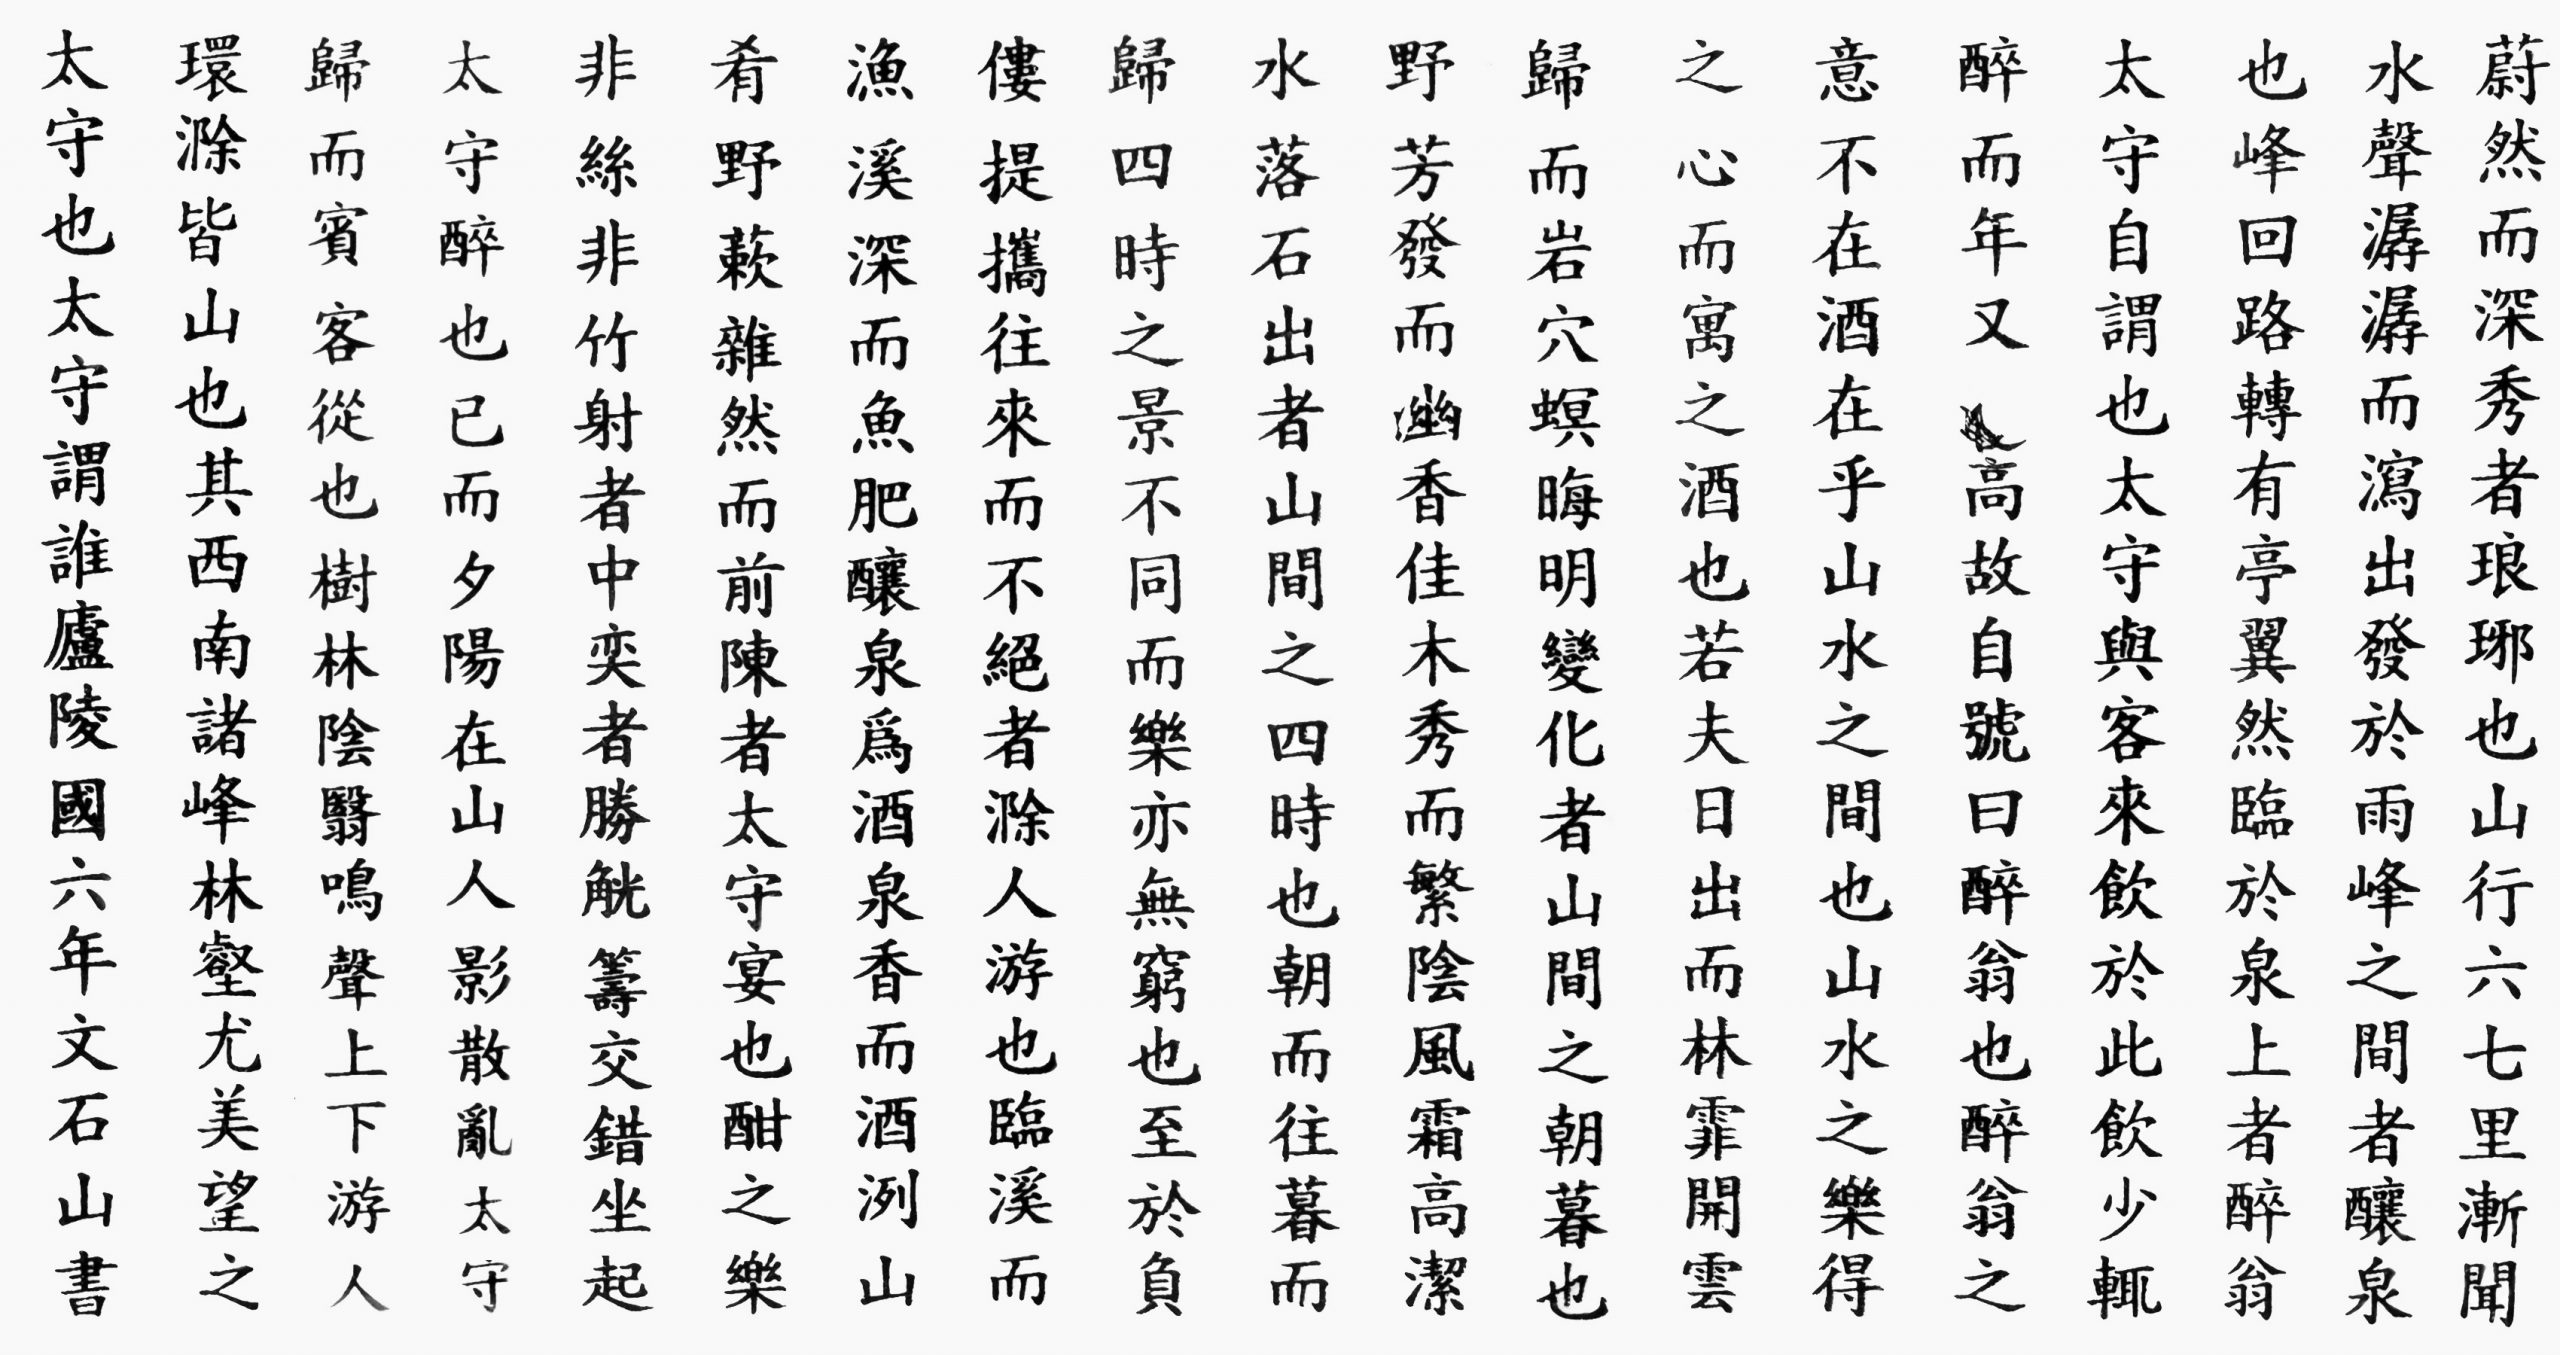 Страница китайского текста